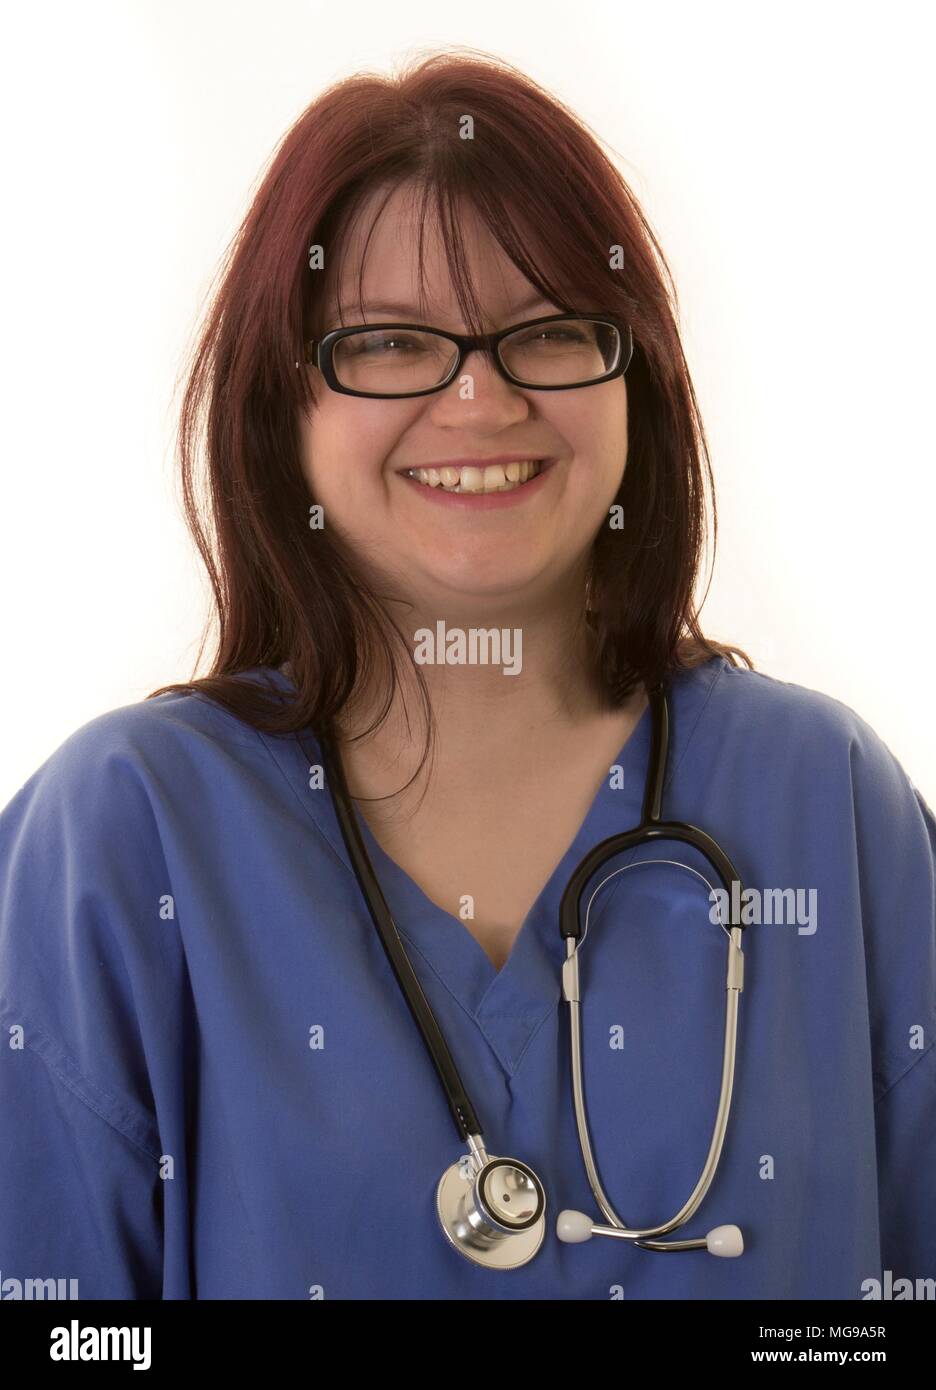 Female doctor smiling, portrait. Stock Photo